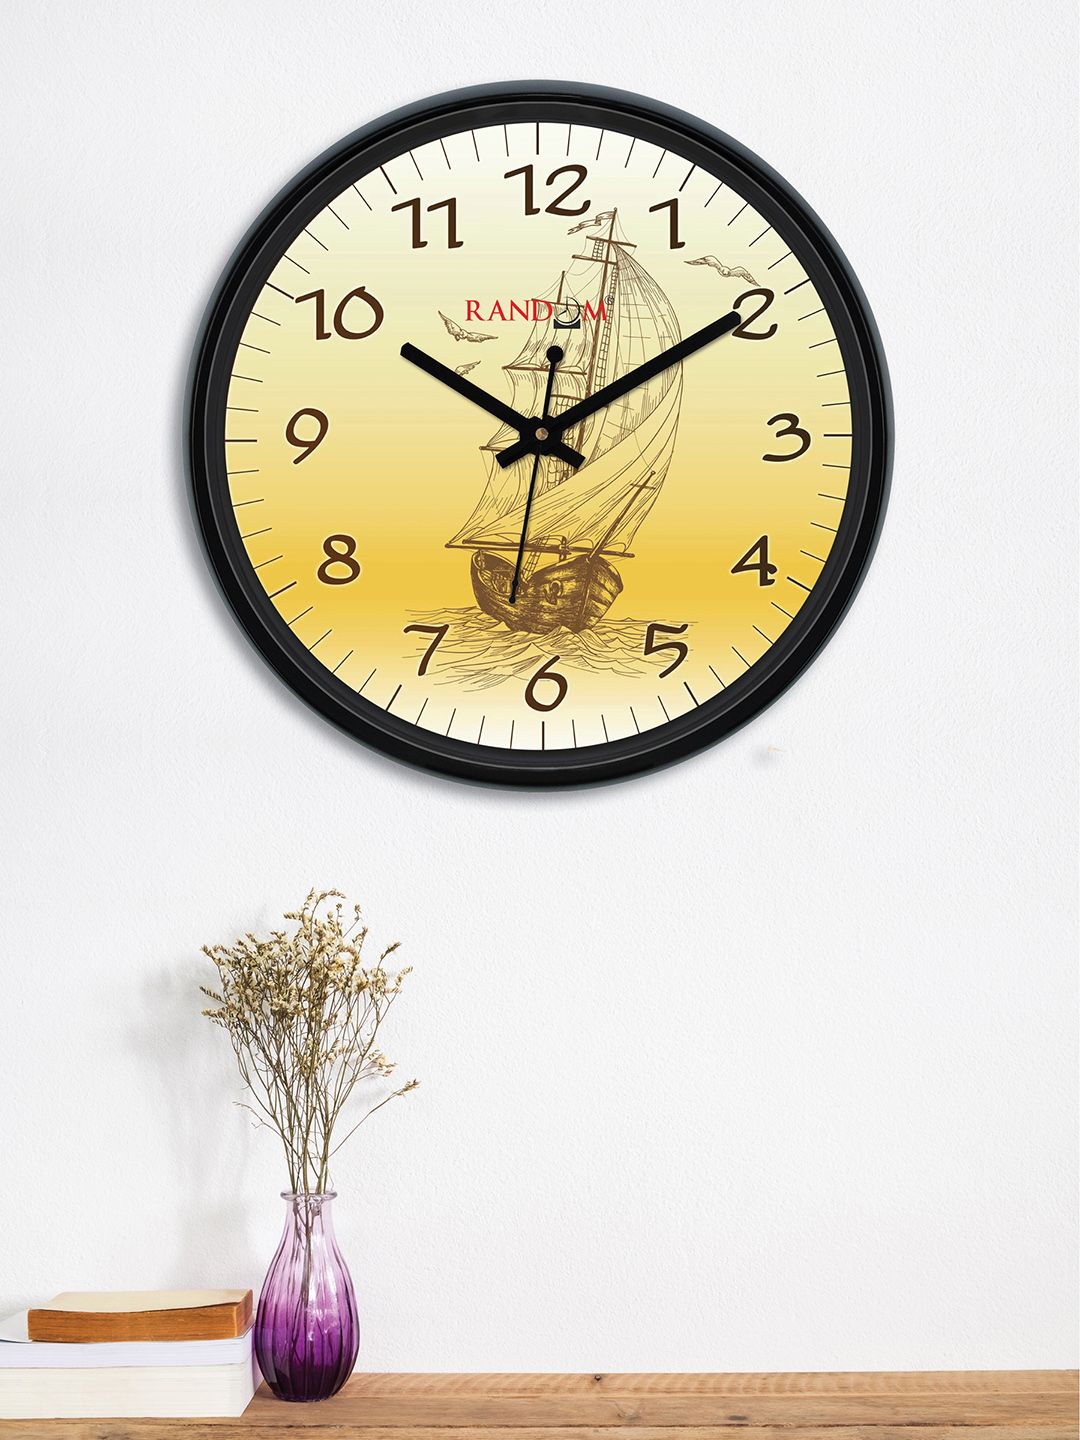 RANDOM Cream-Coloured & Yellow Round Printed 30 cm Analogue Wall Clock Price in India